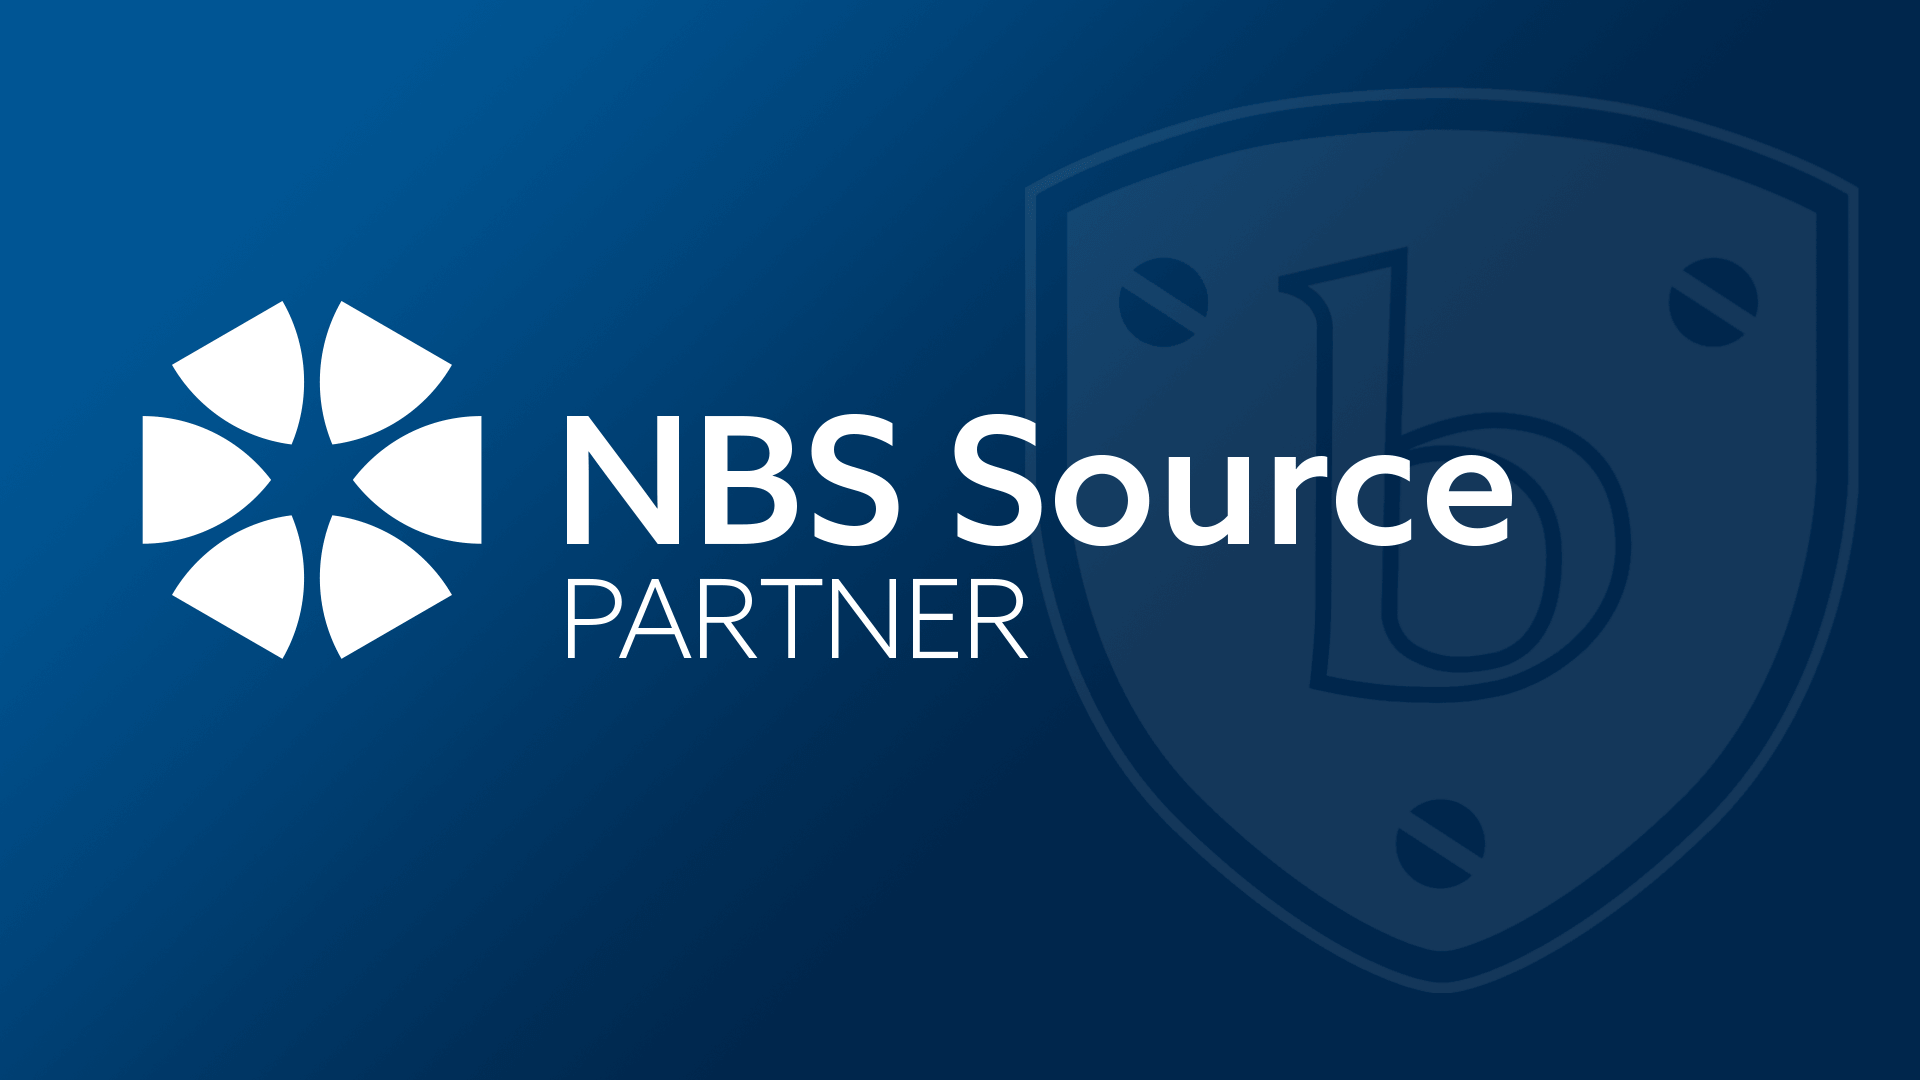 nbs source partner logo bradbury shield blue background